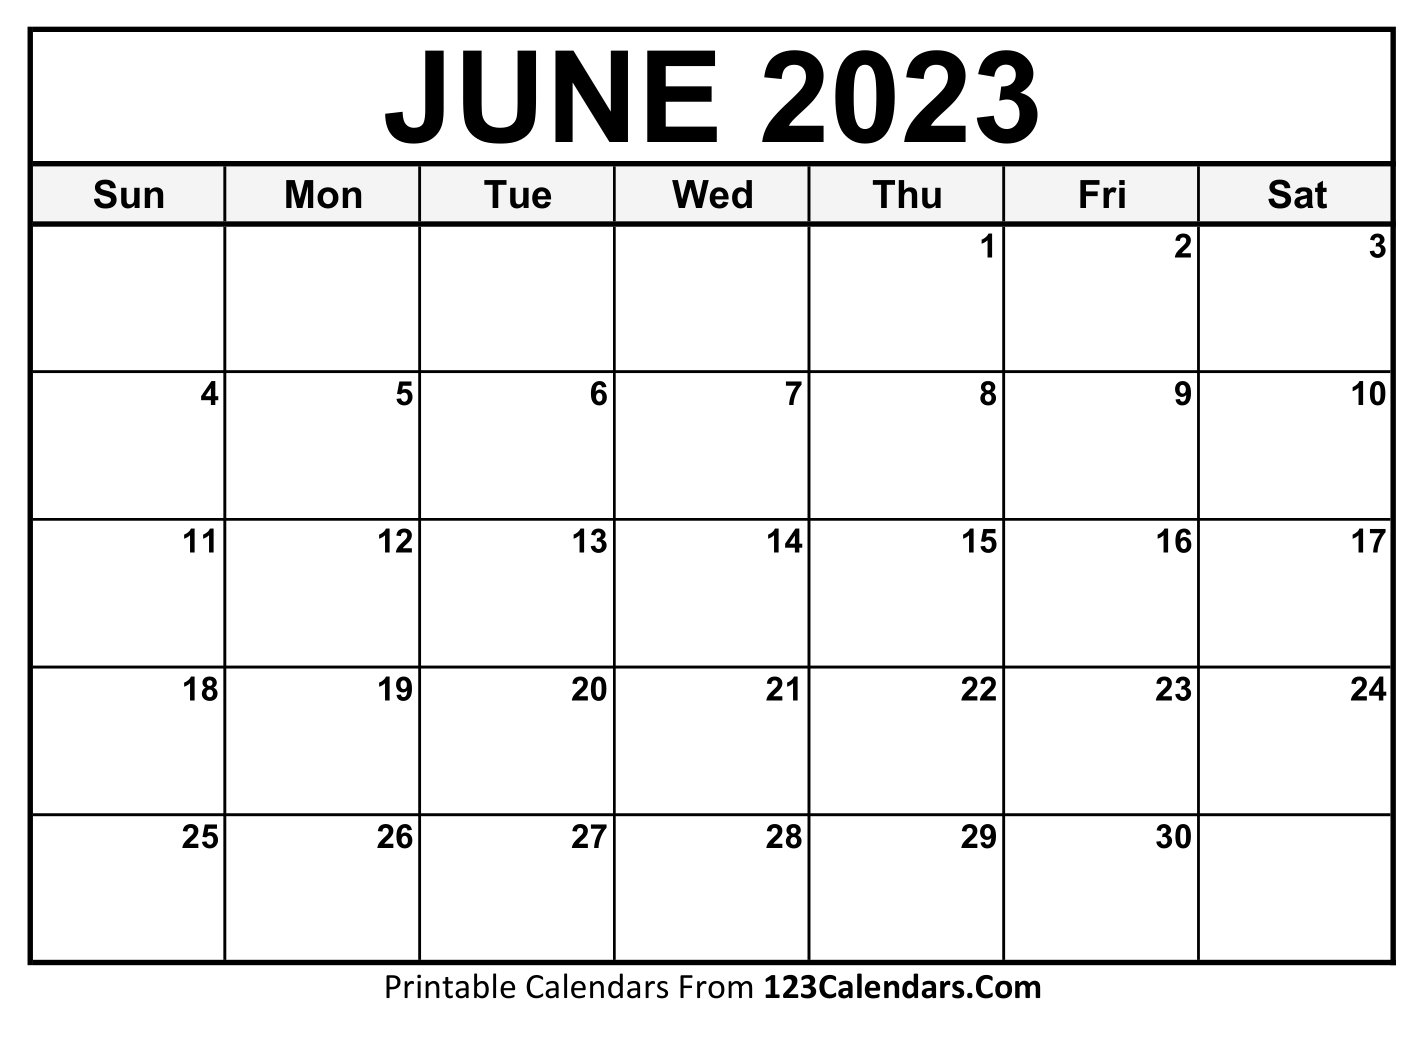 june-2023-calendar-template-printable-calendar